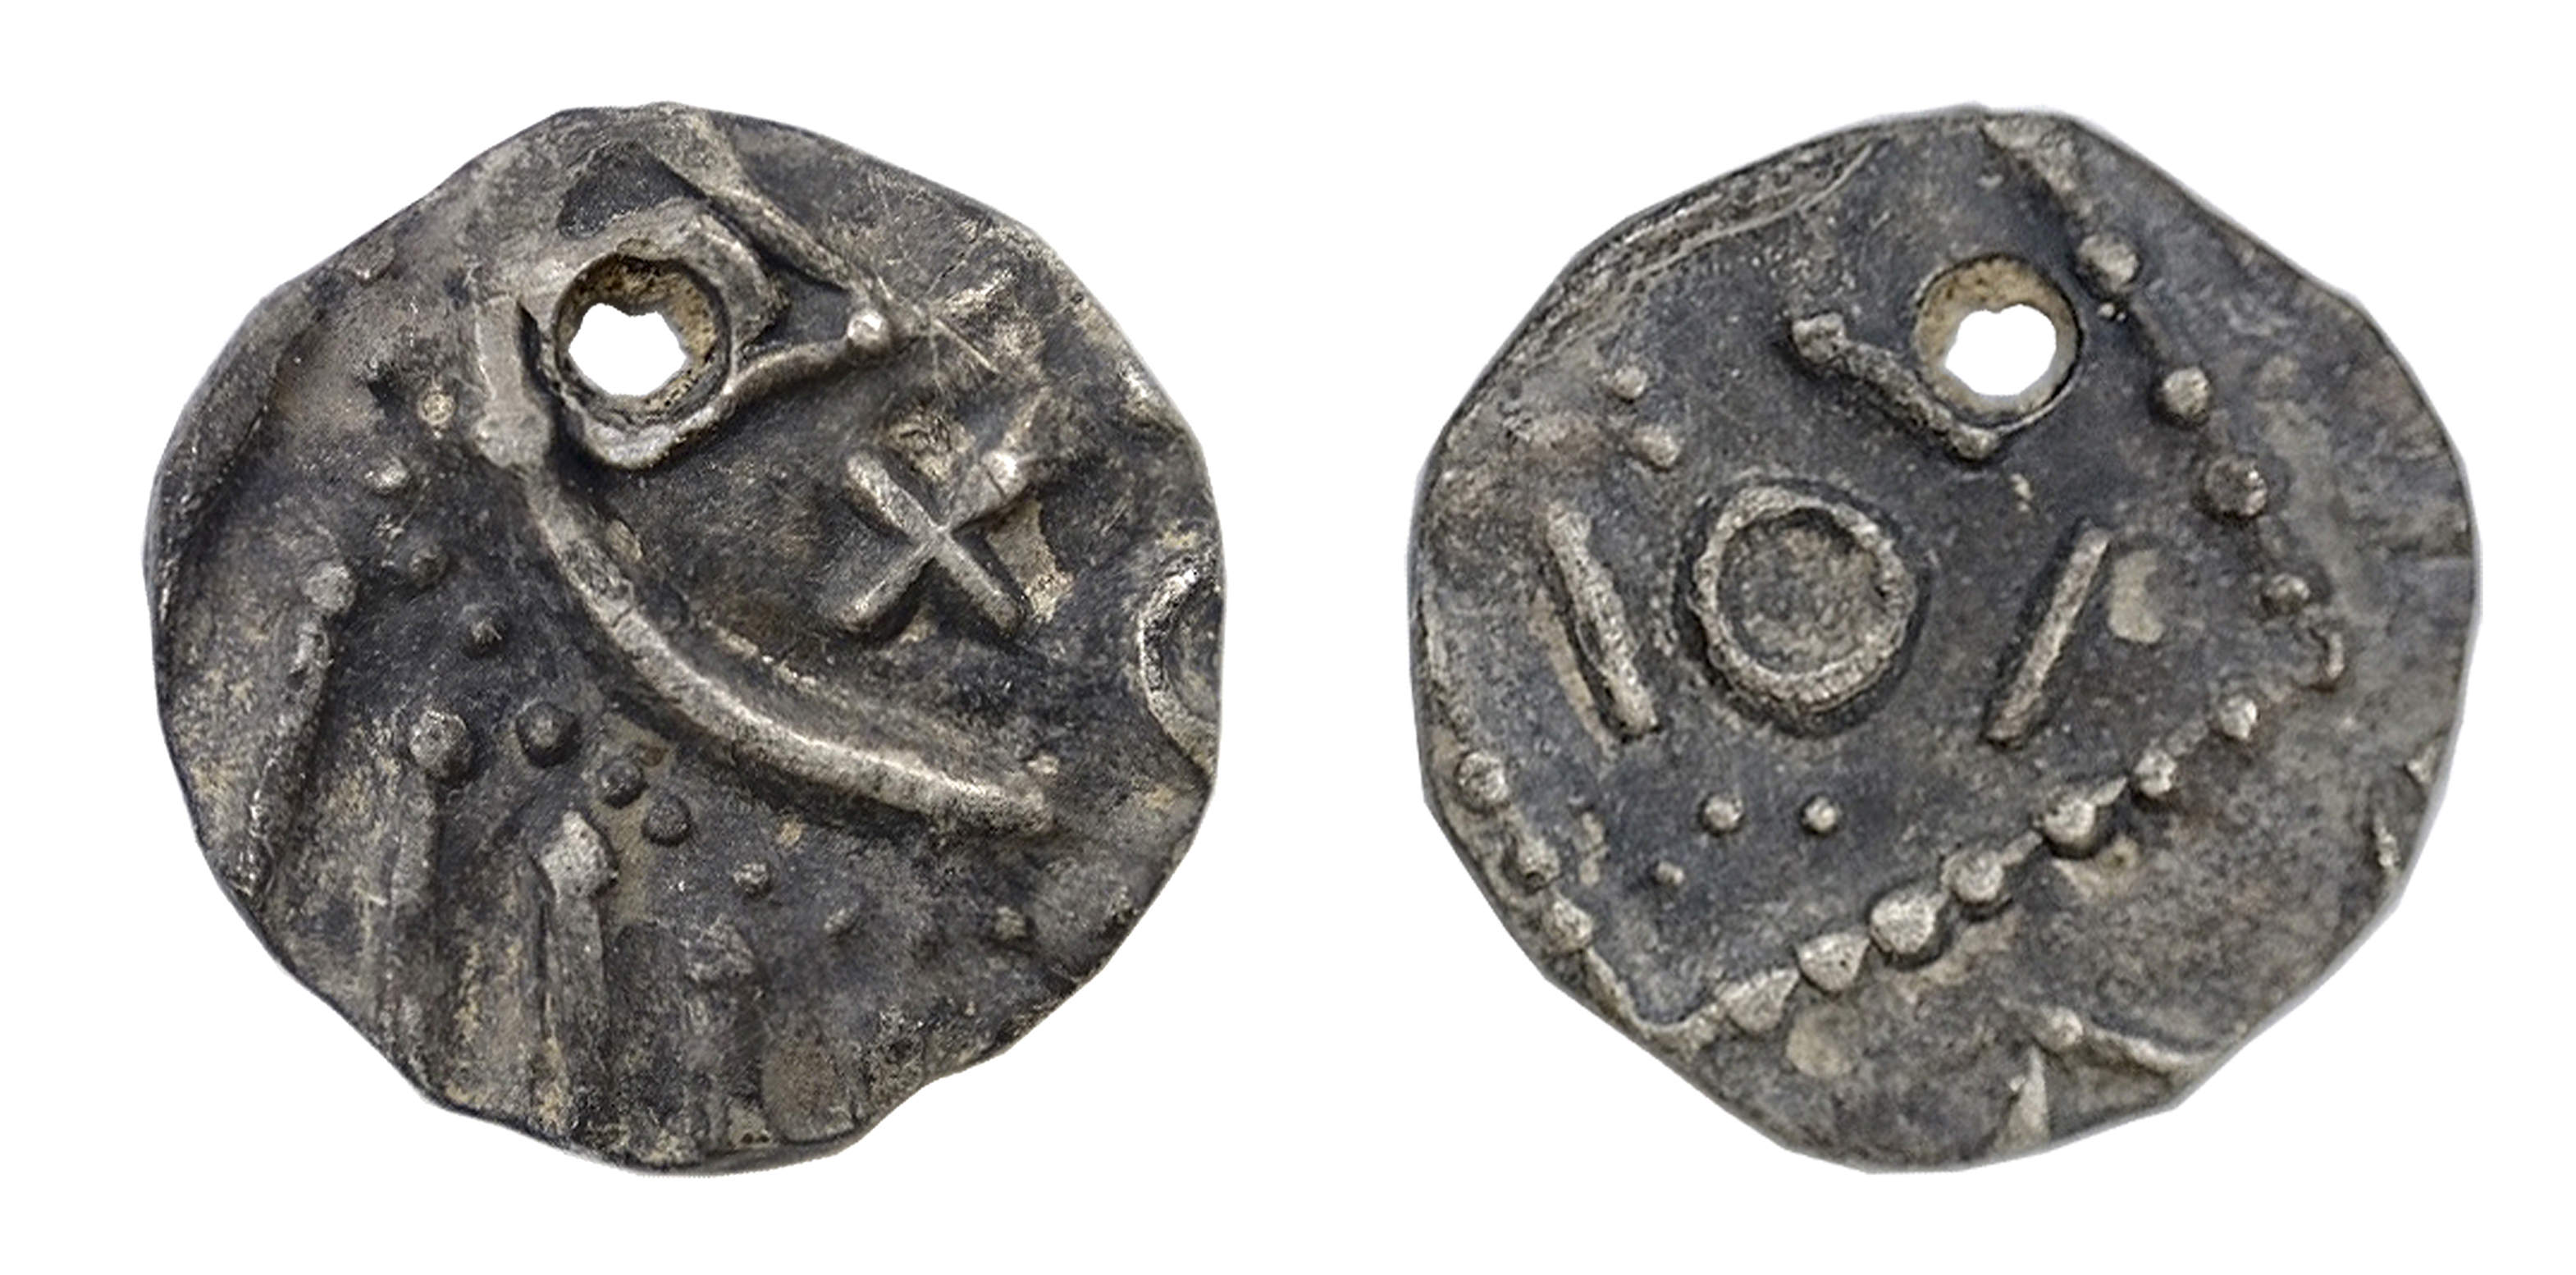 Hänge genomborrat mynt sceatta arkeologi Ströja Norrköping Arkeologikonsult 